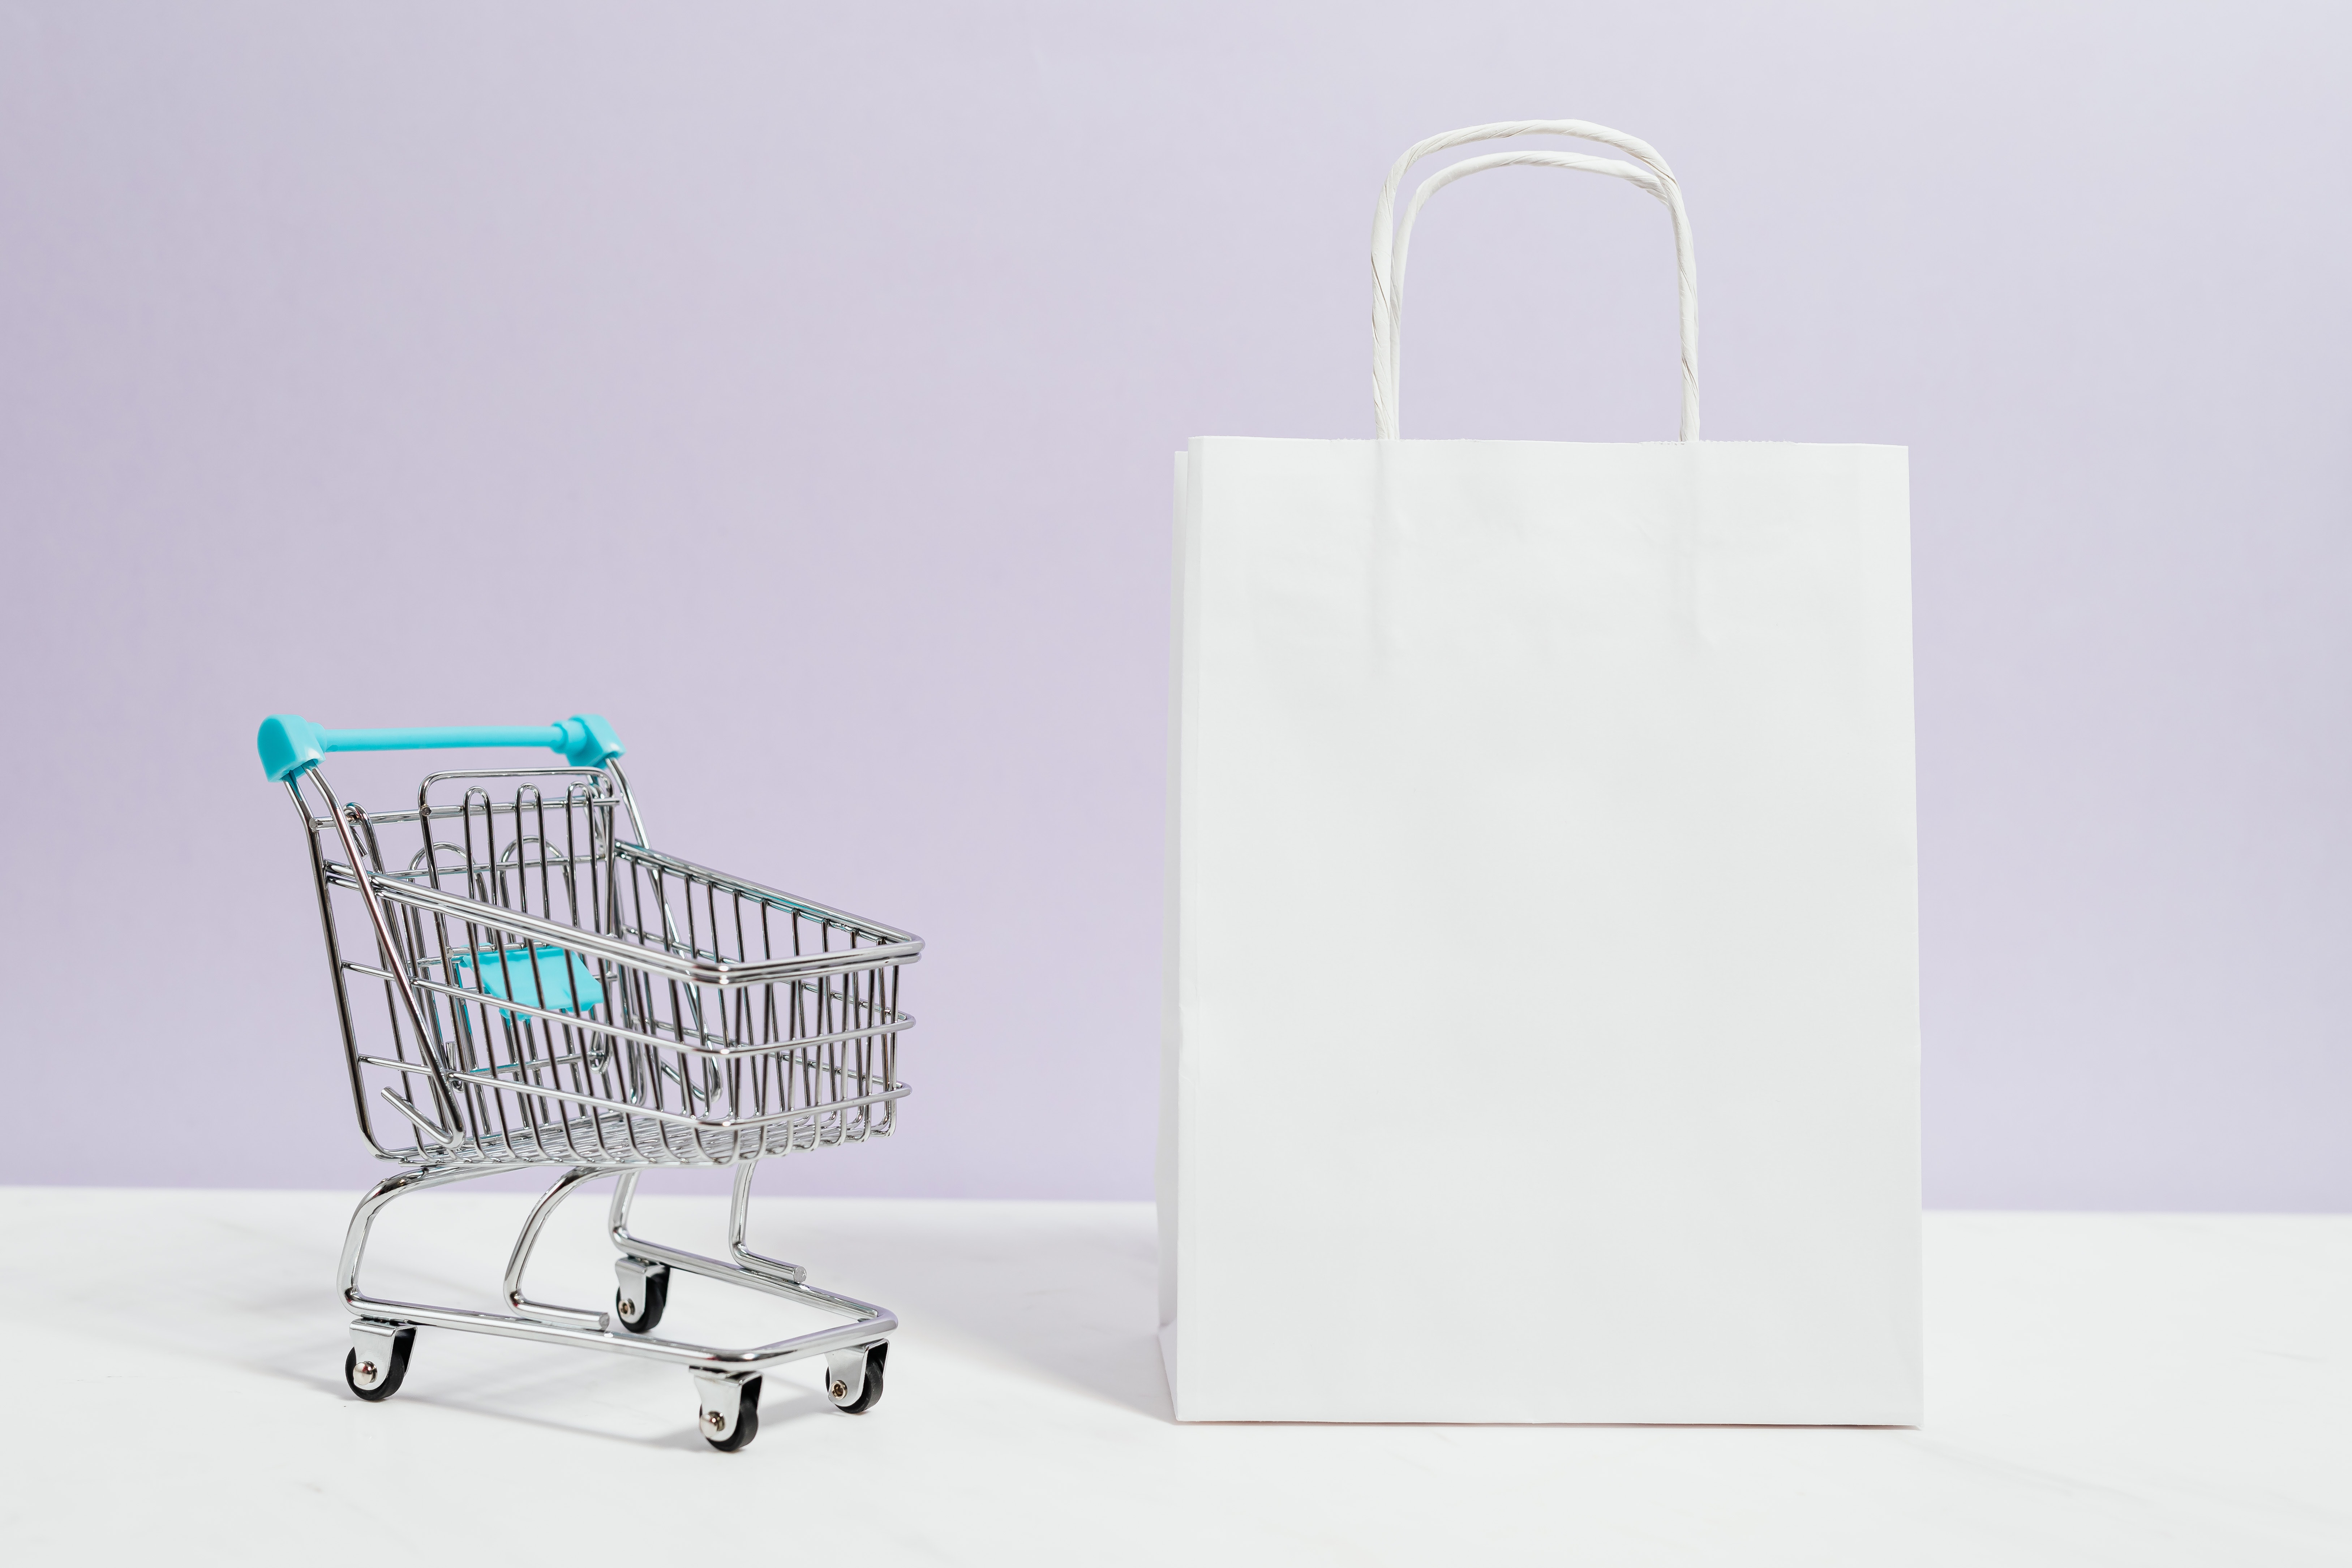 Mini shopping cart and paper bag